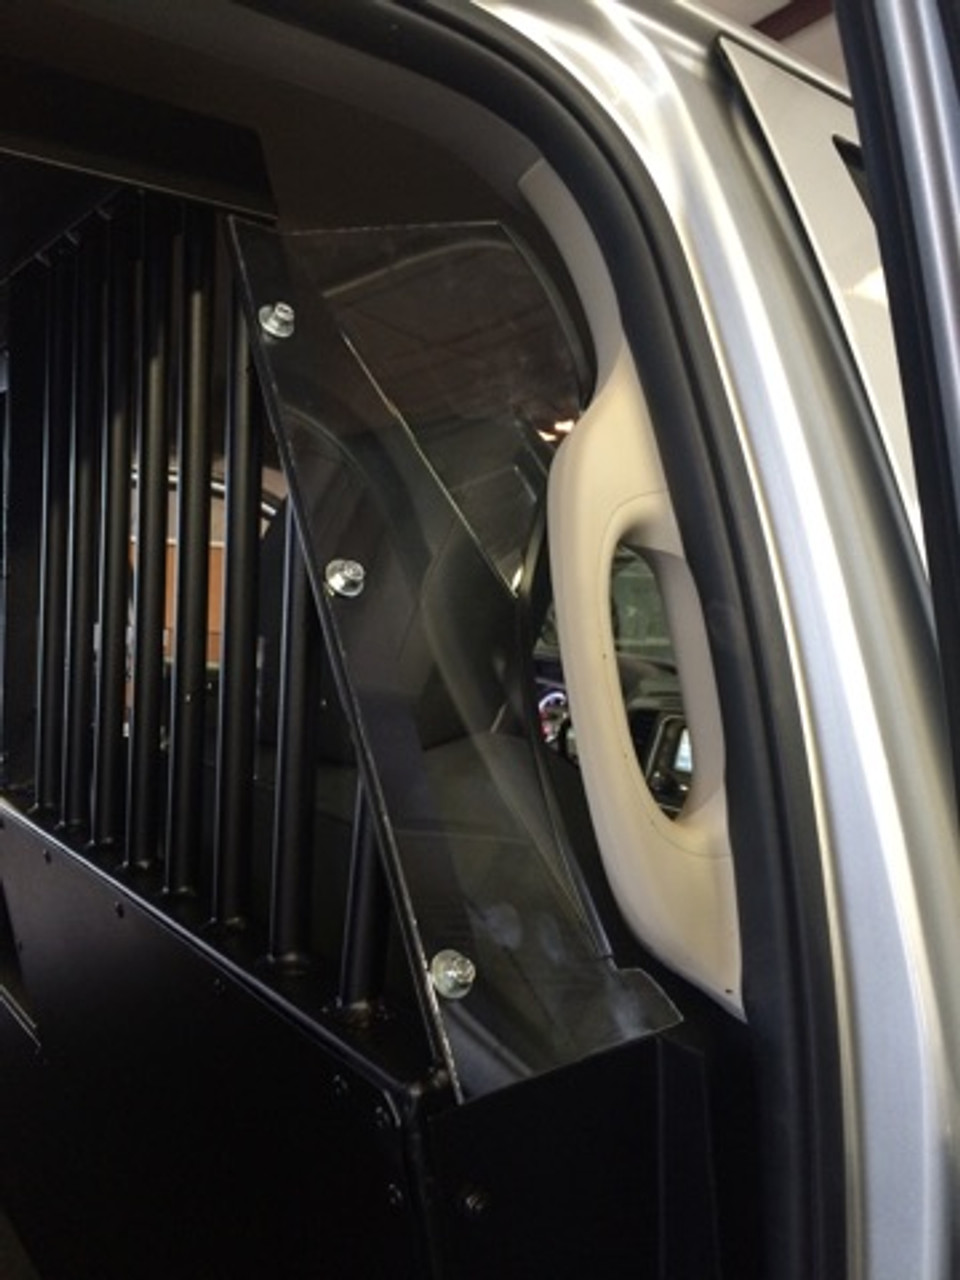 American Aluminum Dodge Ram Crew Cab 2015-2019 EZ Rider Law Enforcement K9 Kennel Transport System, Insert, Black or Aluminum Finish, includes rubber mat, door panels, and window guards